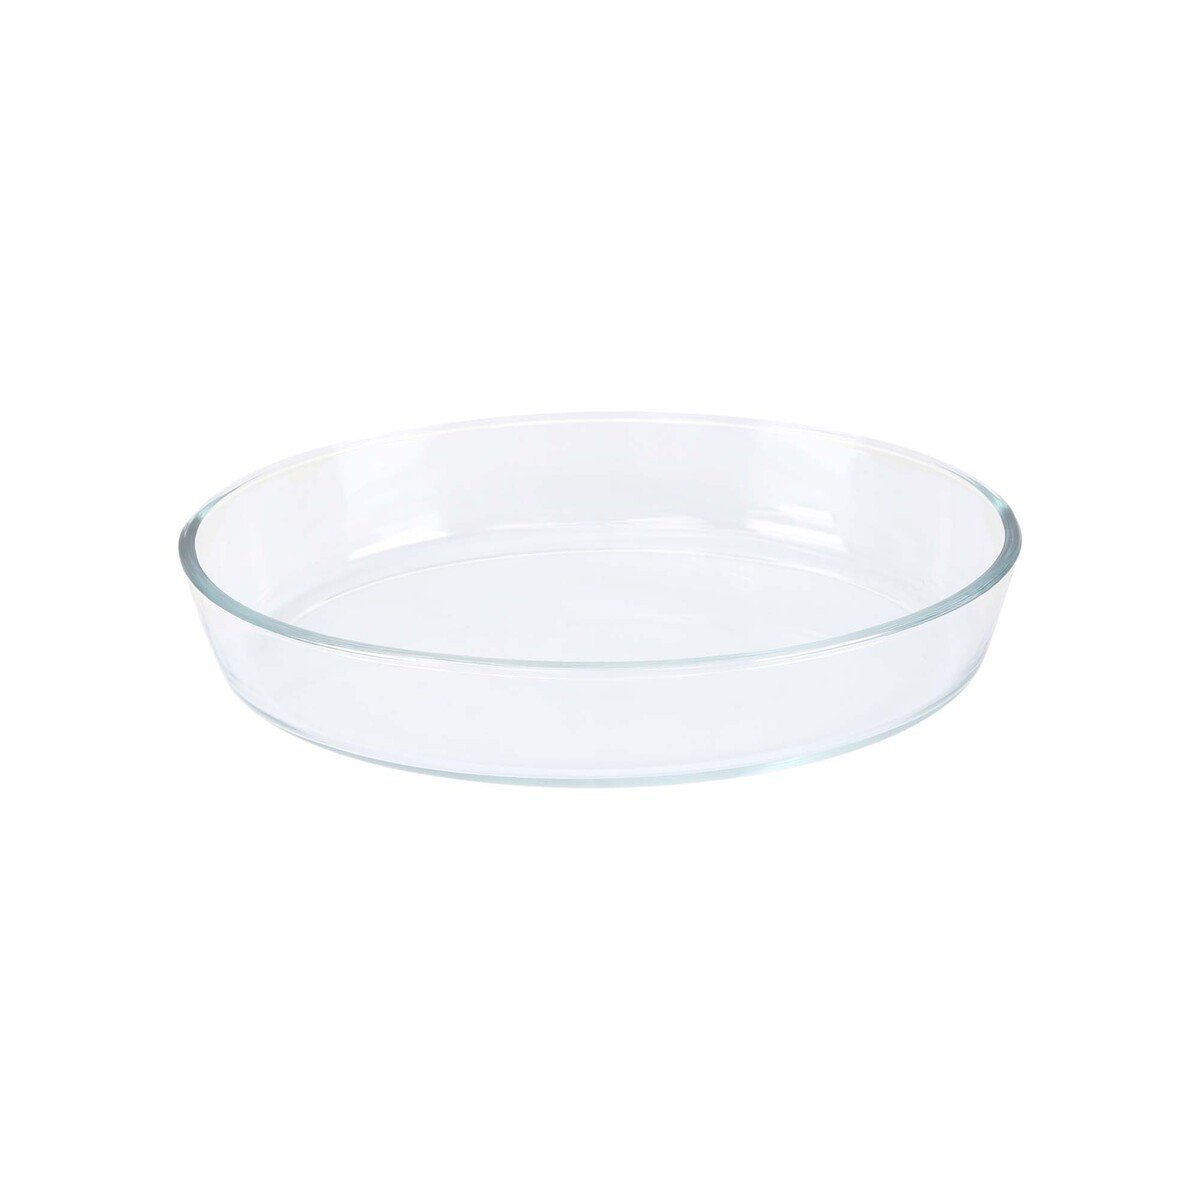 Chefline HSAP16L Borosilicate Glass Oval Baking Dish, 1.6 Litre, Transparent